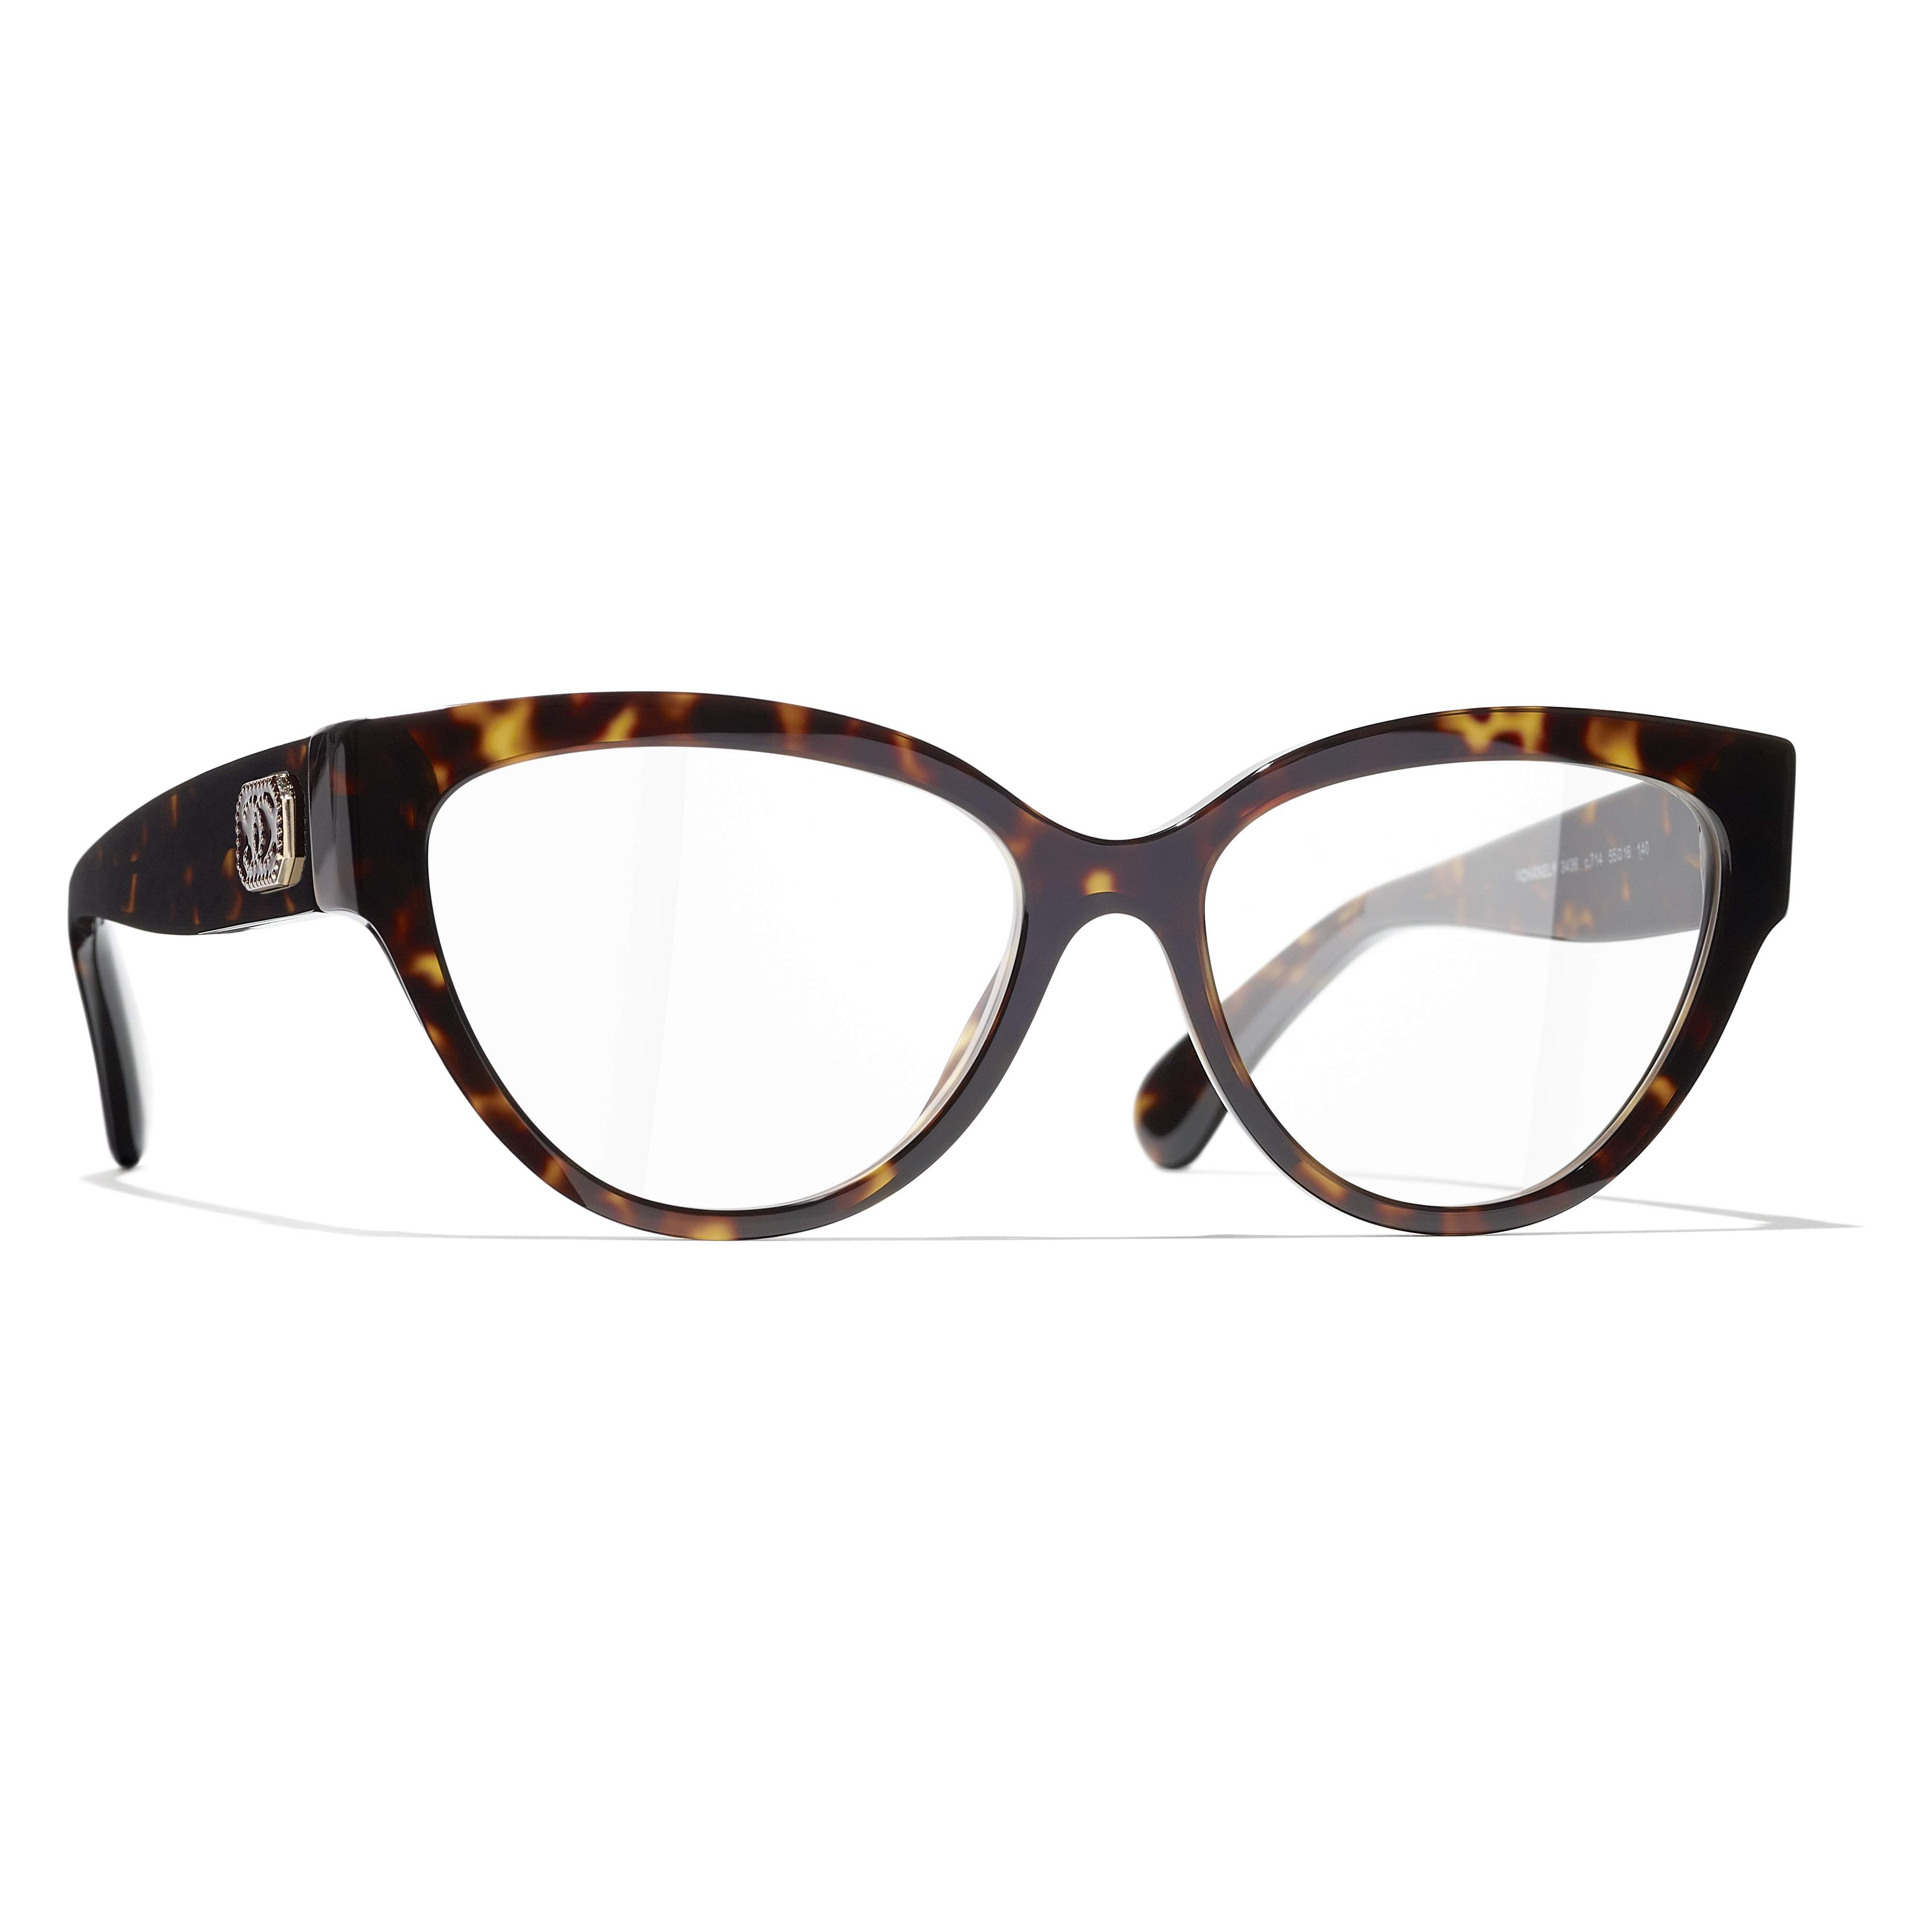 Chanel Oval Sunglasses - Acetate, Dark Tortoise - Polarized - UV Protected - Women's Sunglasses - 5486 C714/83